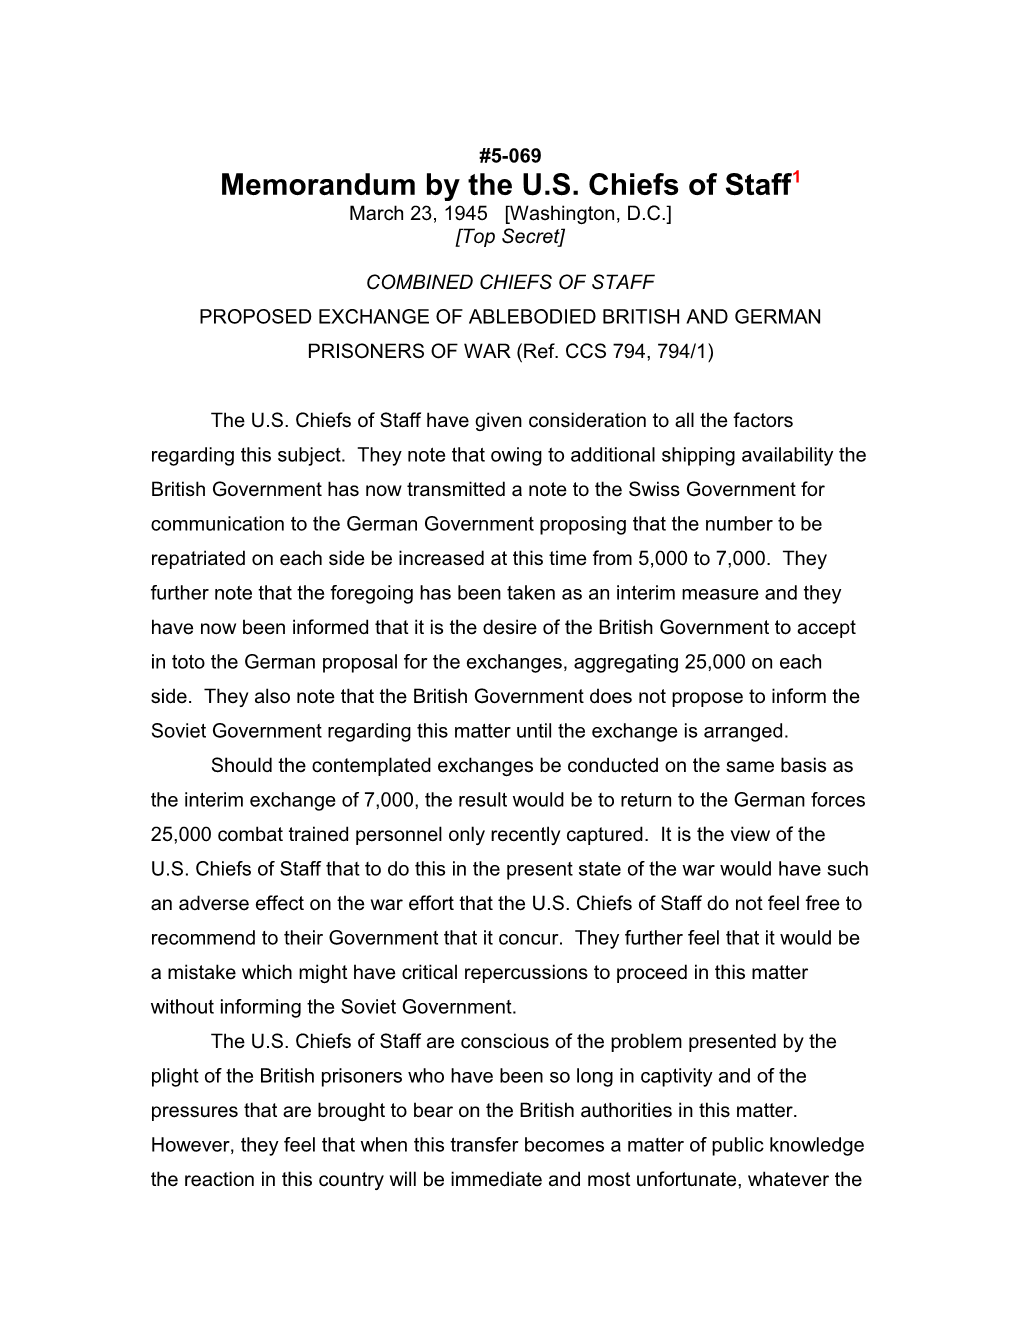 Memorandum by the U.S. Chiefs of Staff1